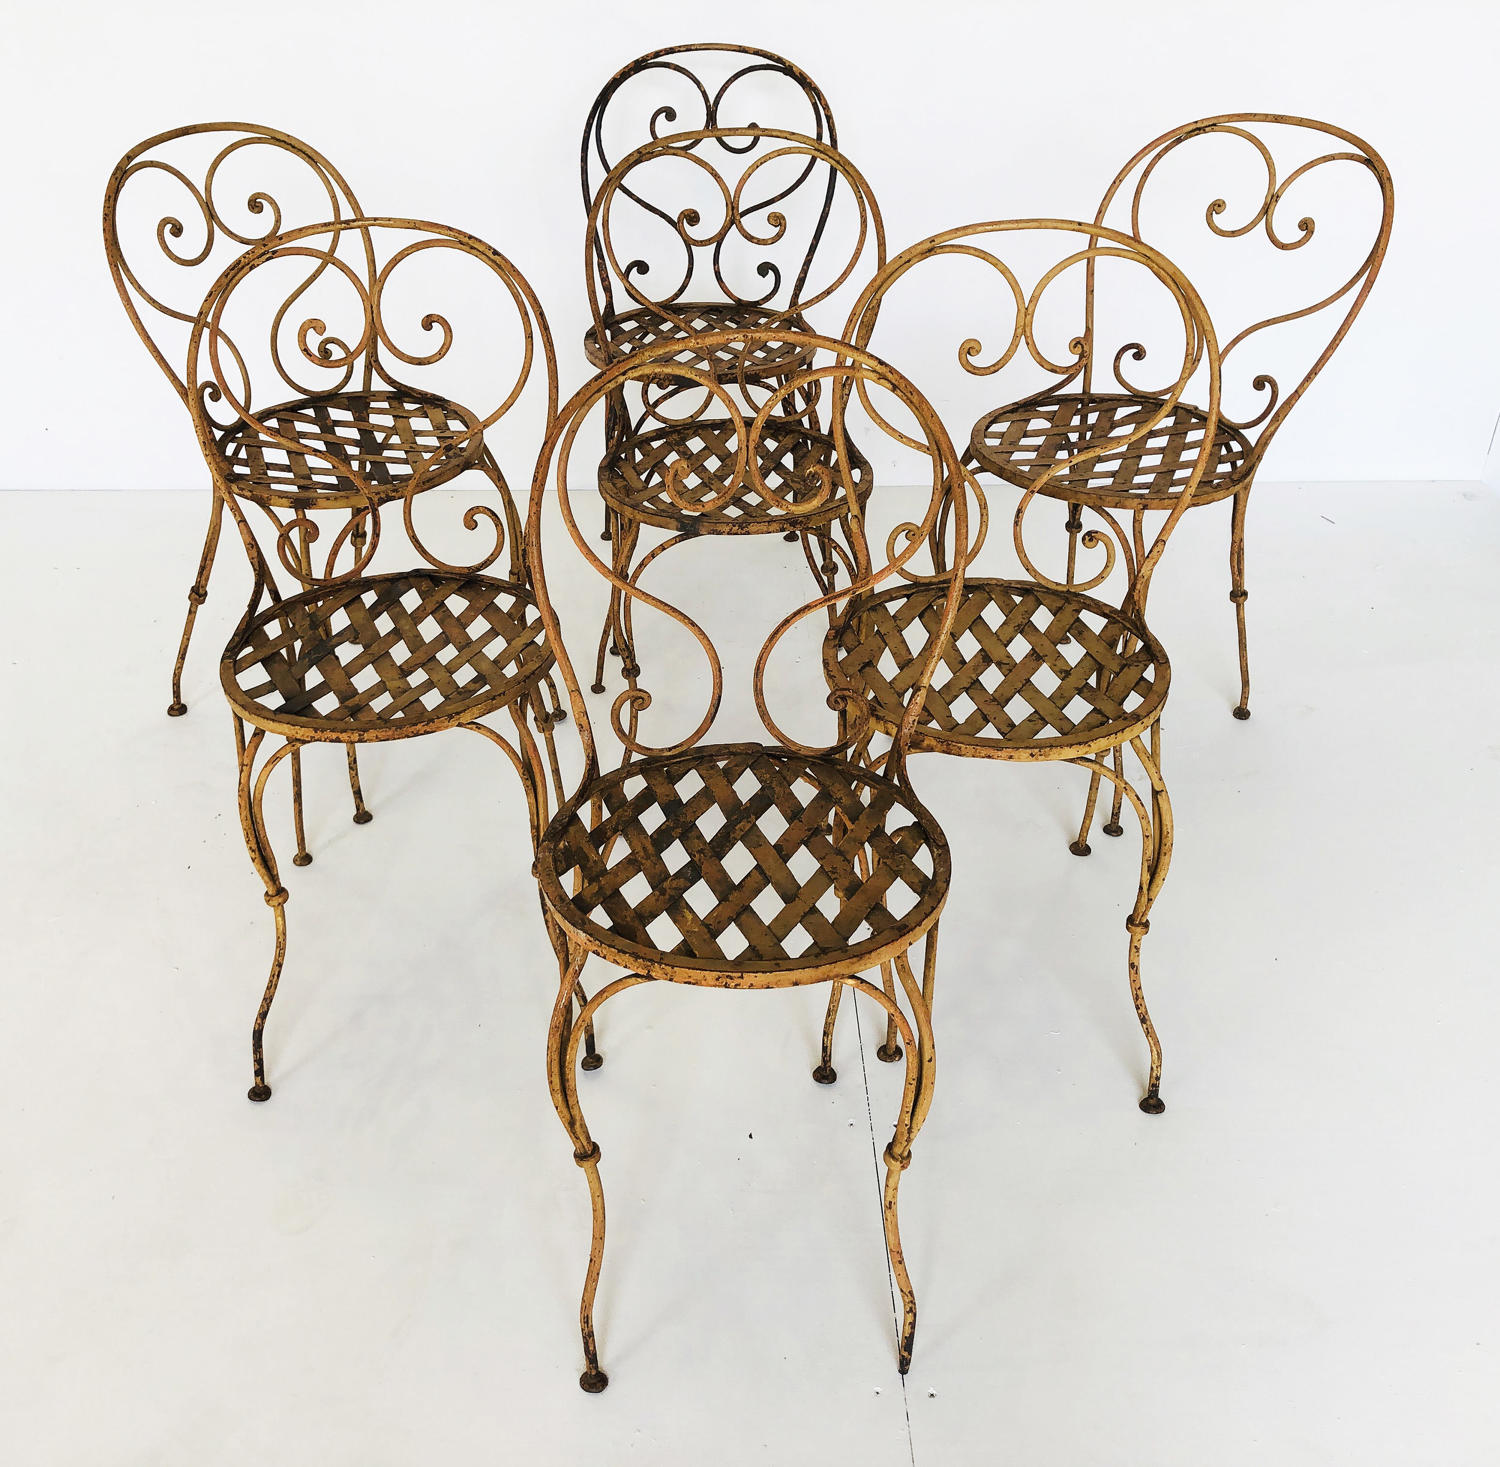 Set of 7 Italain Iron Garden Chairs - circa 1890